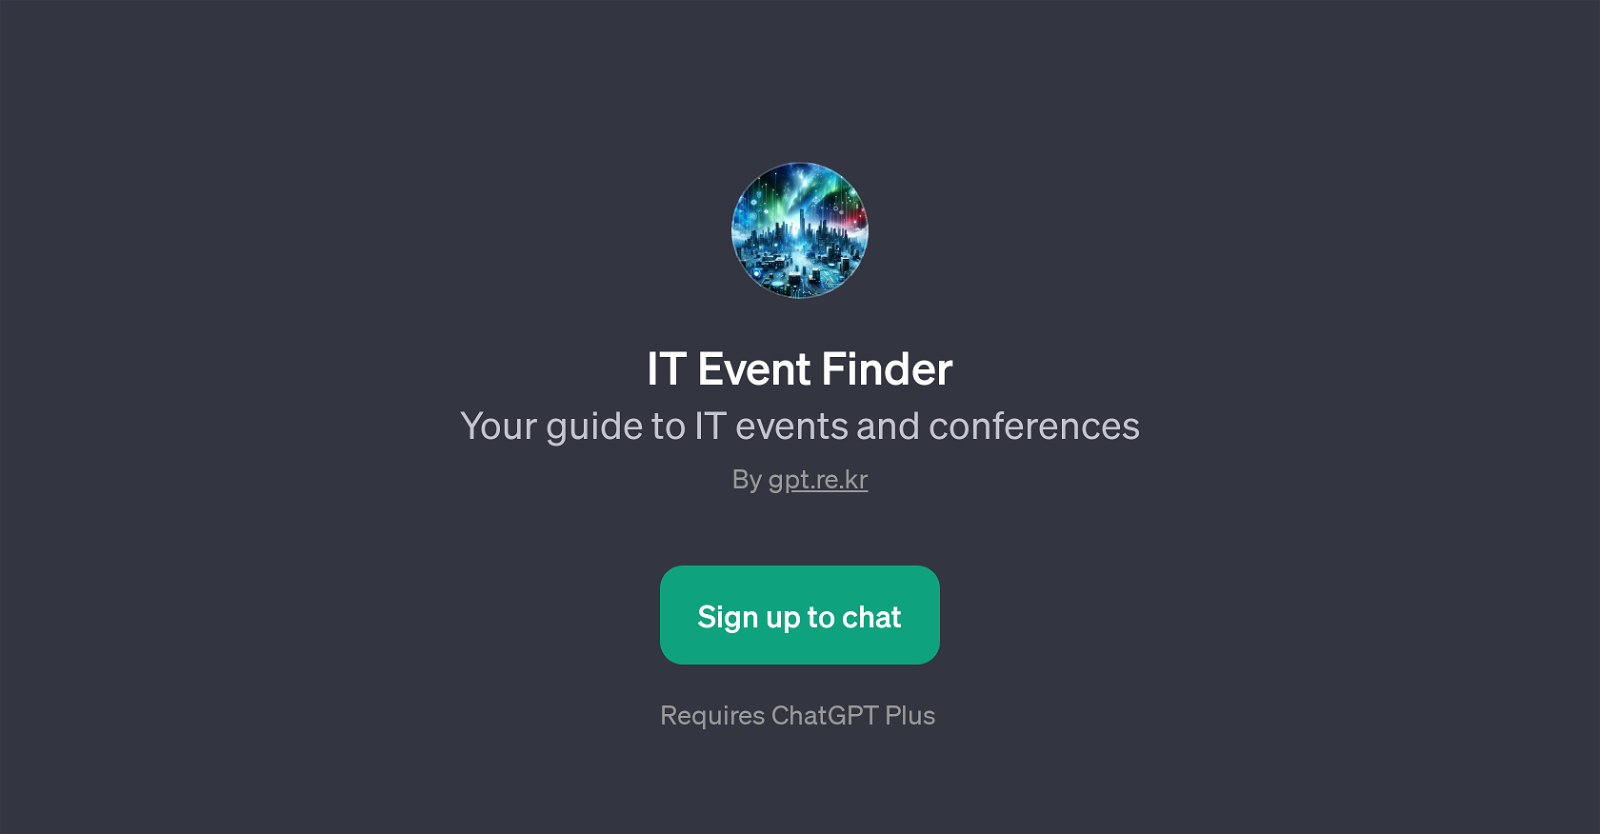 IT Event Finder website